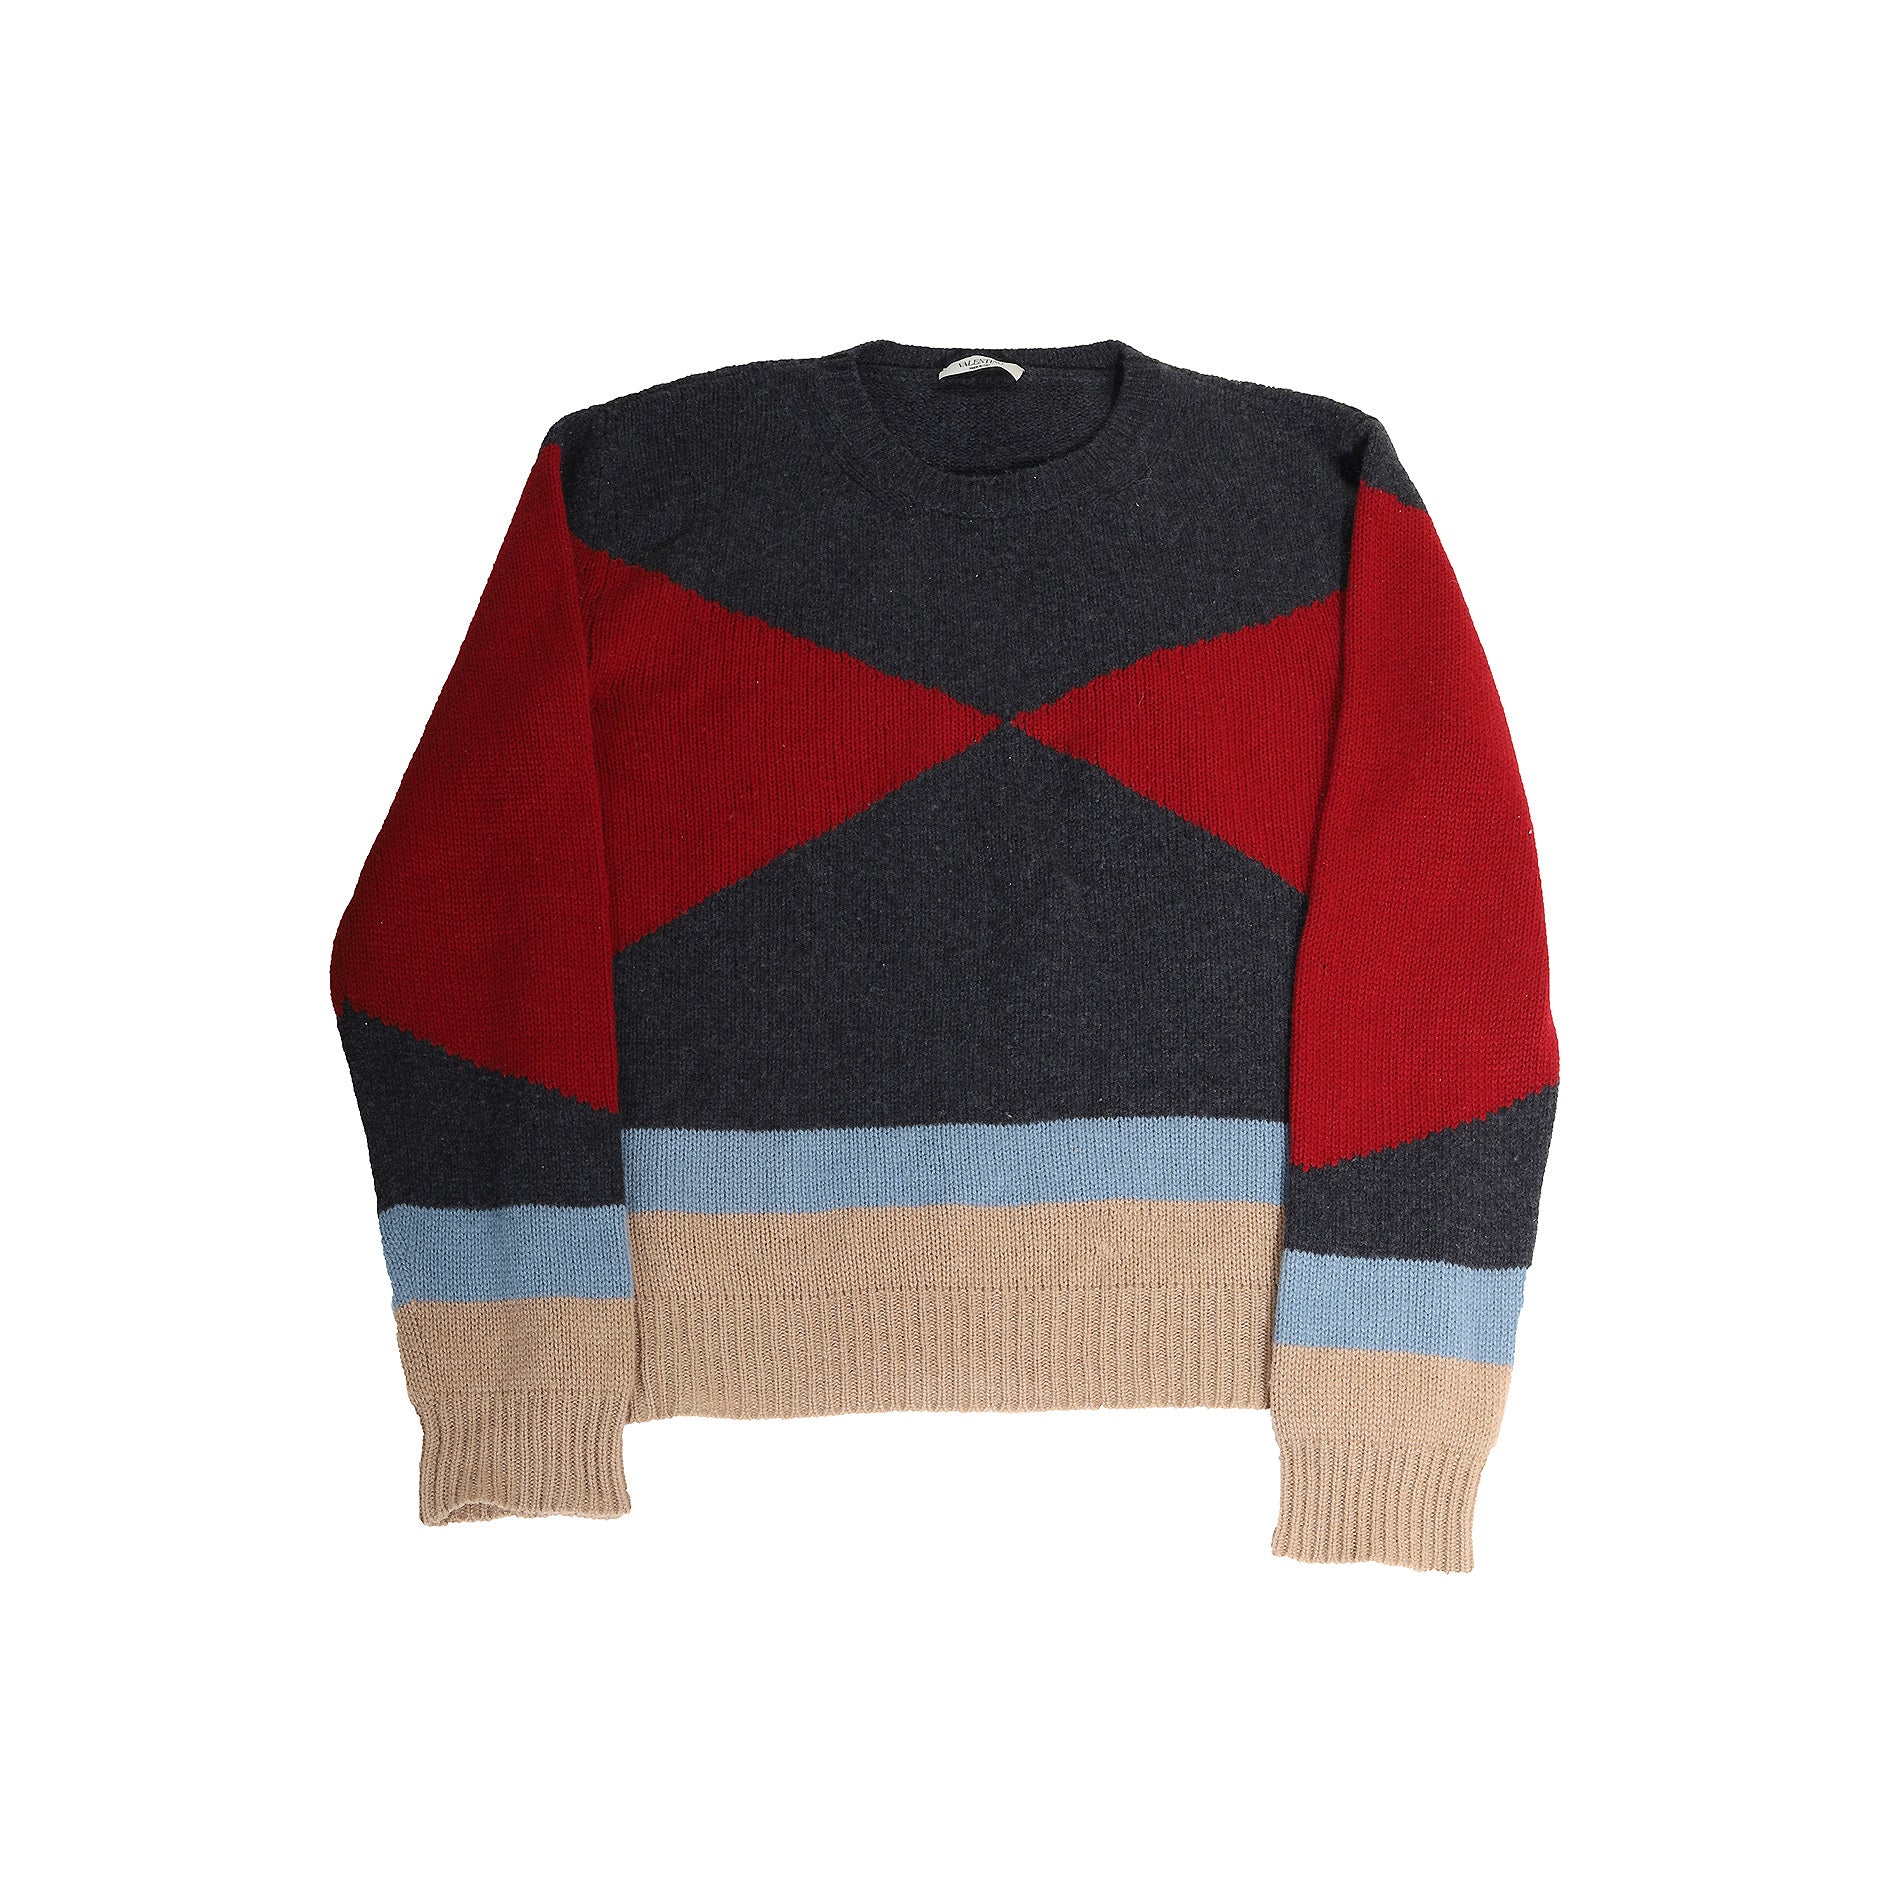 Valentino AW14 Geomtric Cashmere Knit Sweater